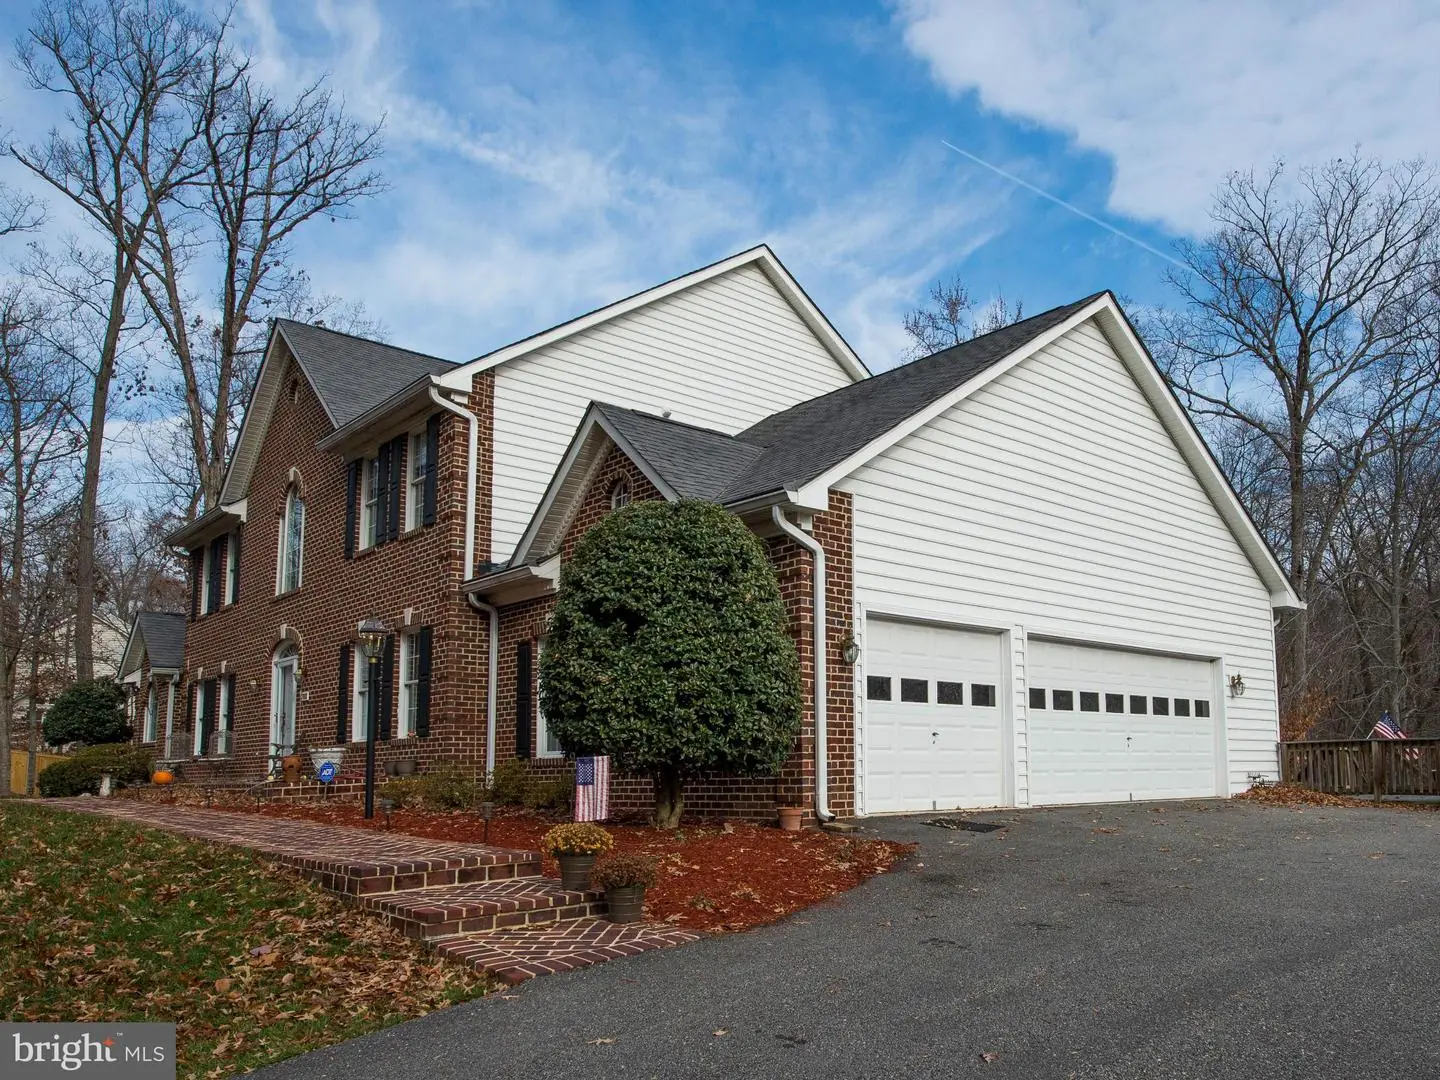 1003683057-300722843969-2021-09-07-02-31-50  |   | Springfield Delaware Real Estate For Sale | MLS# 1003683057  - Best of Northern Virginia